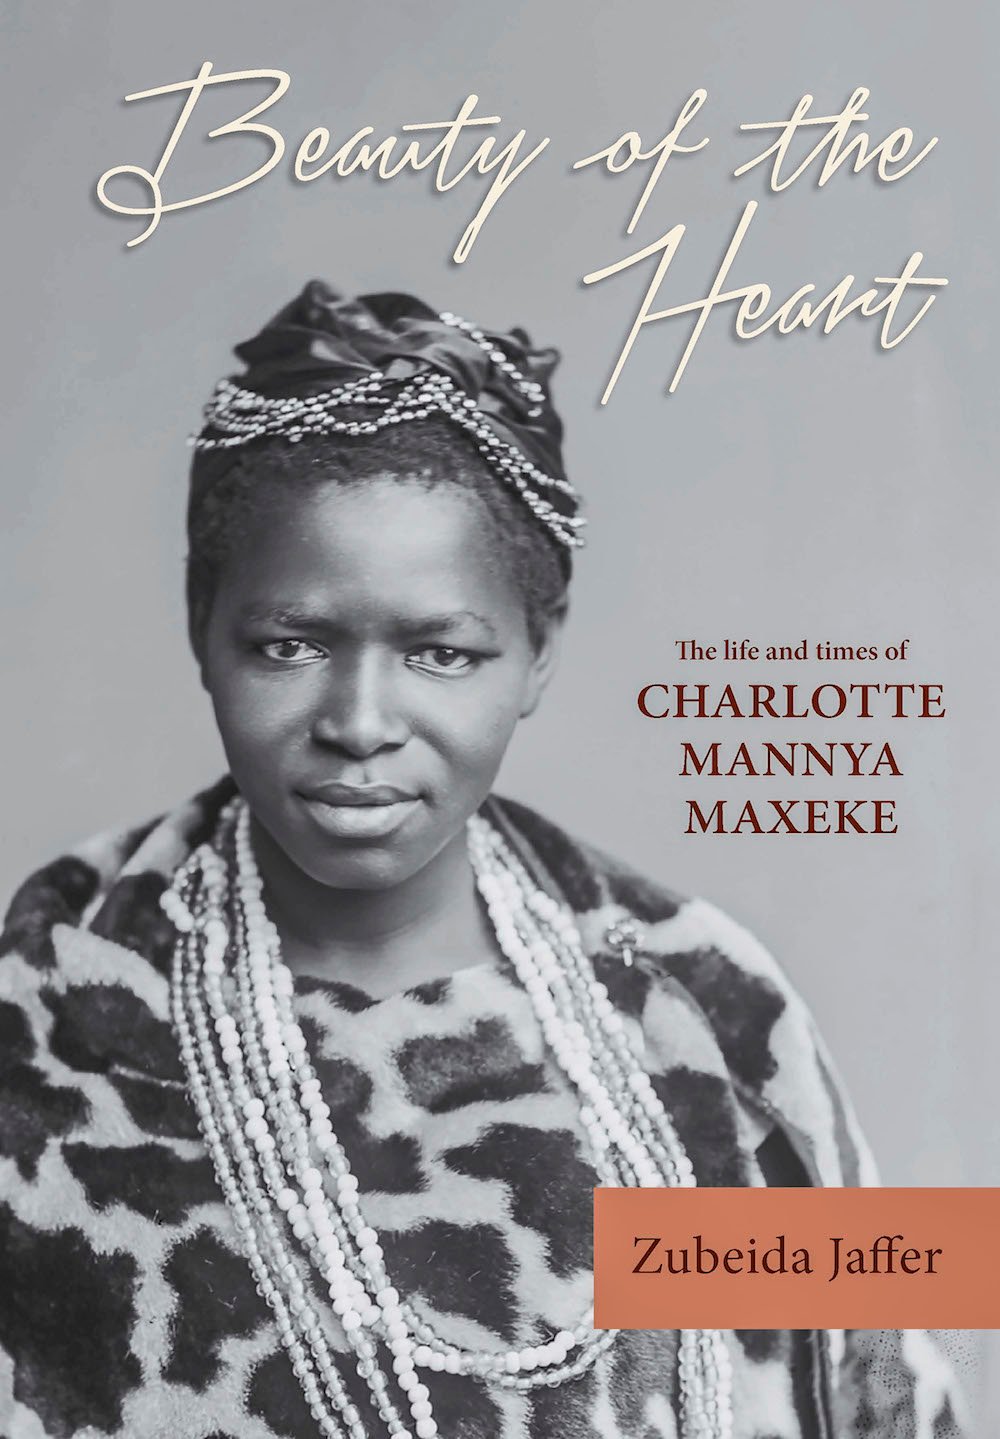 book on Charlotte Maxeke